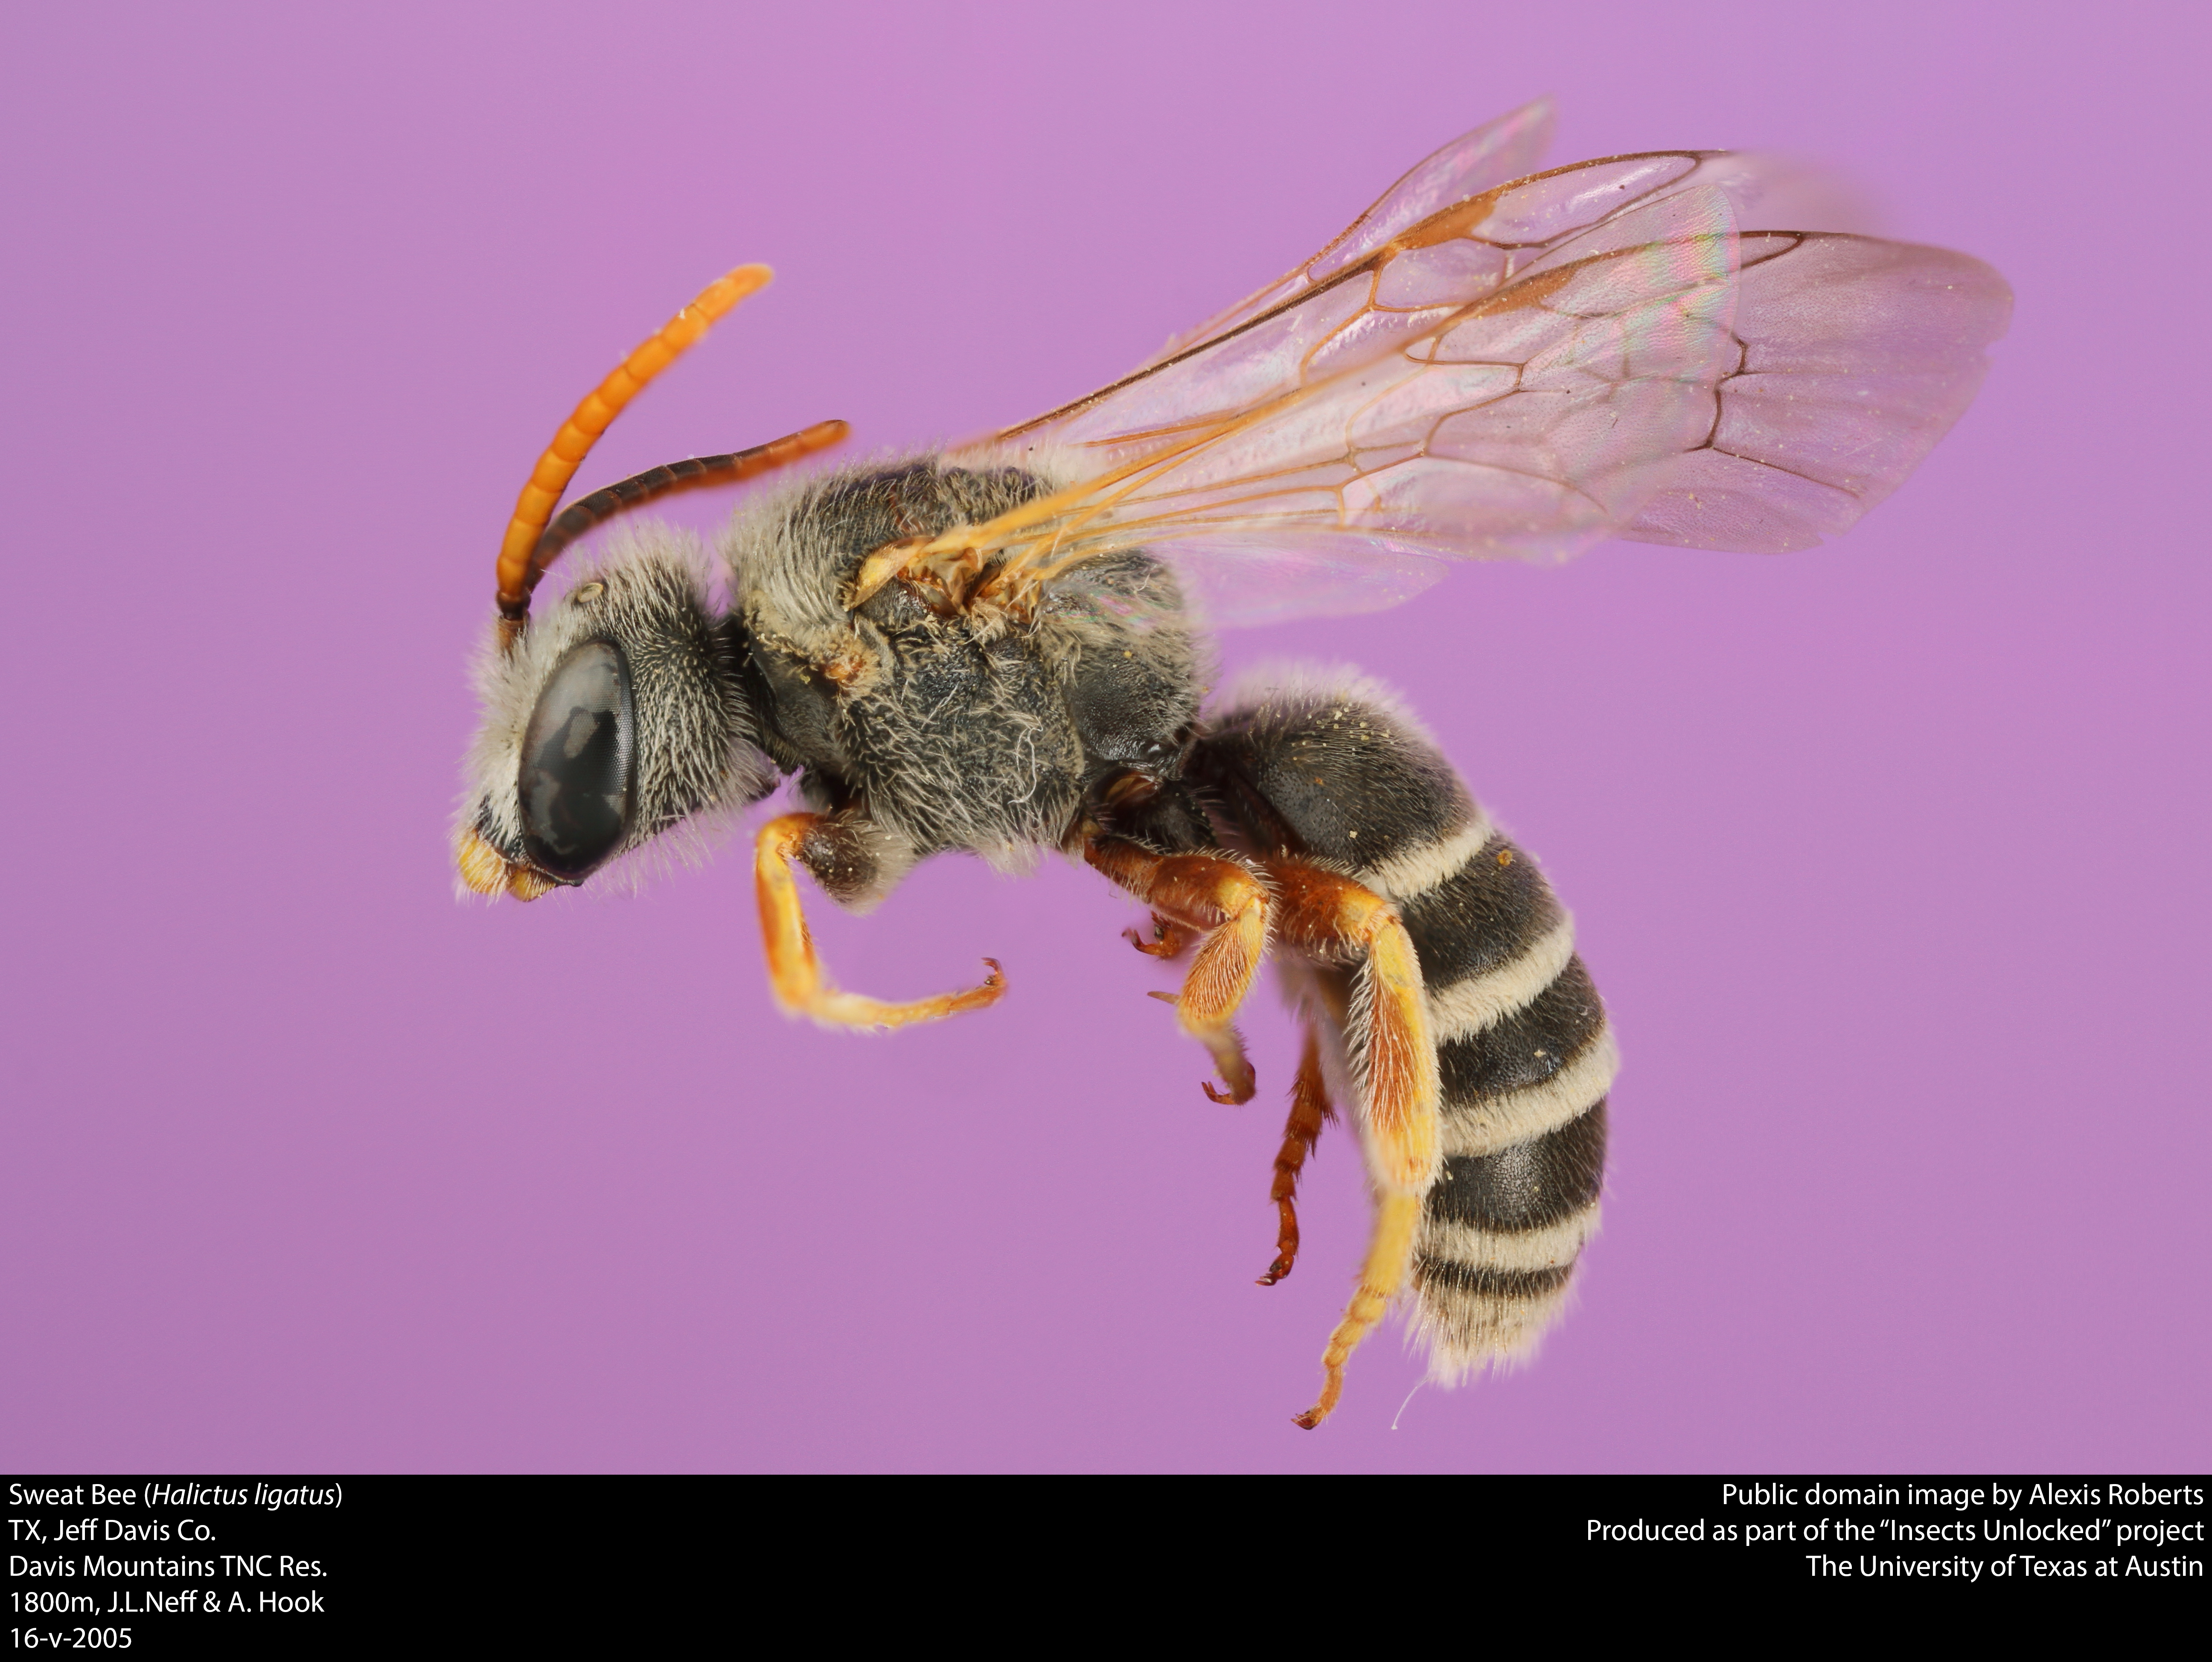 File:Sweat bee (Halictus ligatus) (37770111622).jpg - Wikimedia Commons